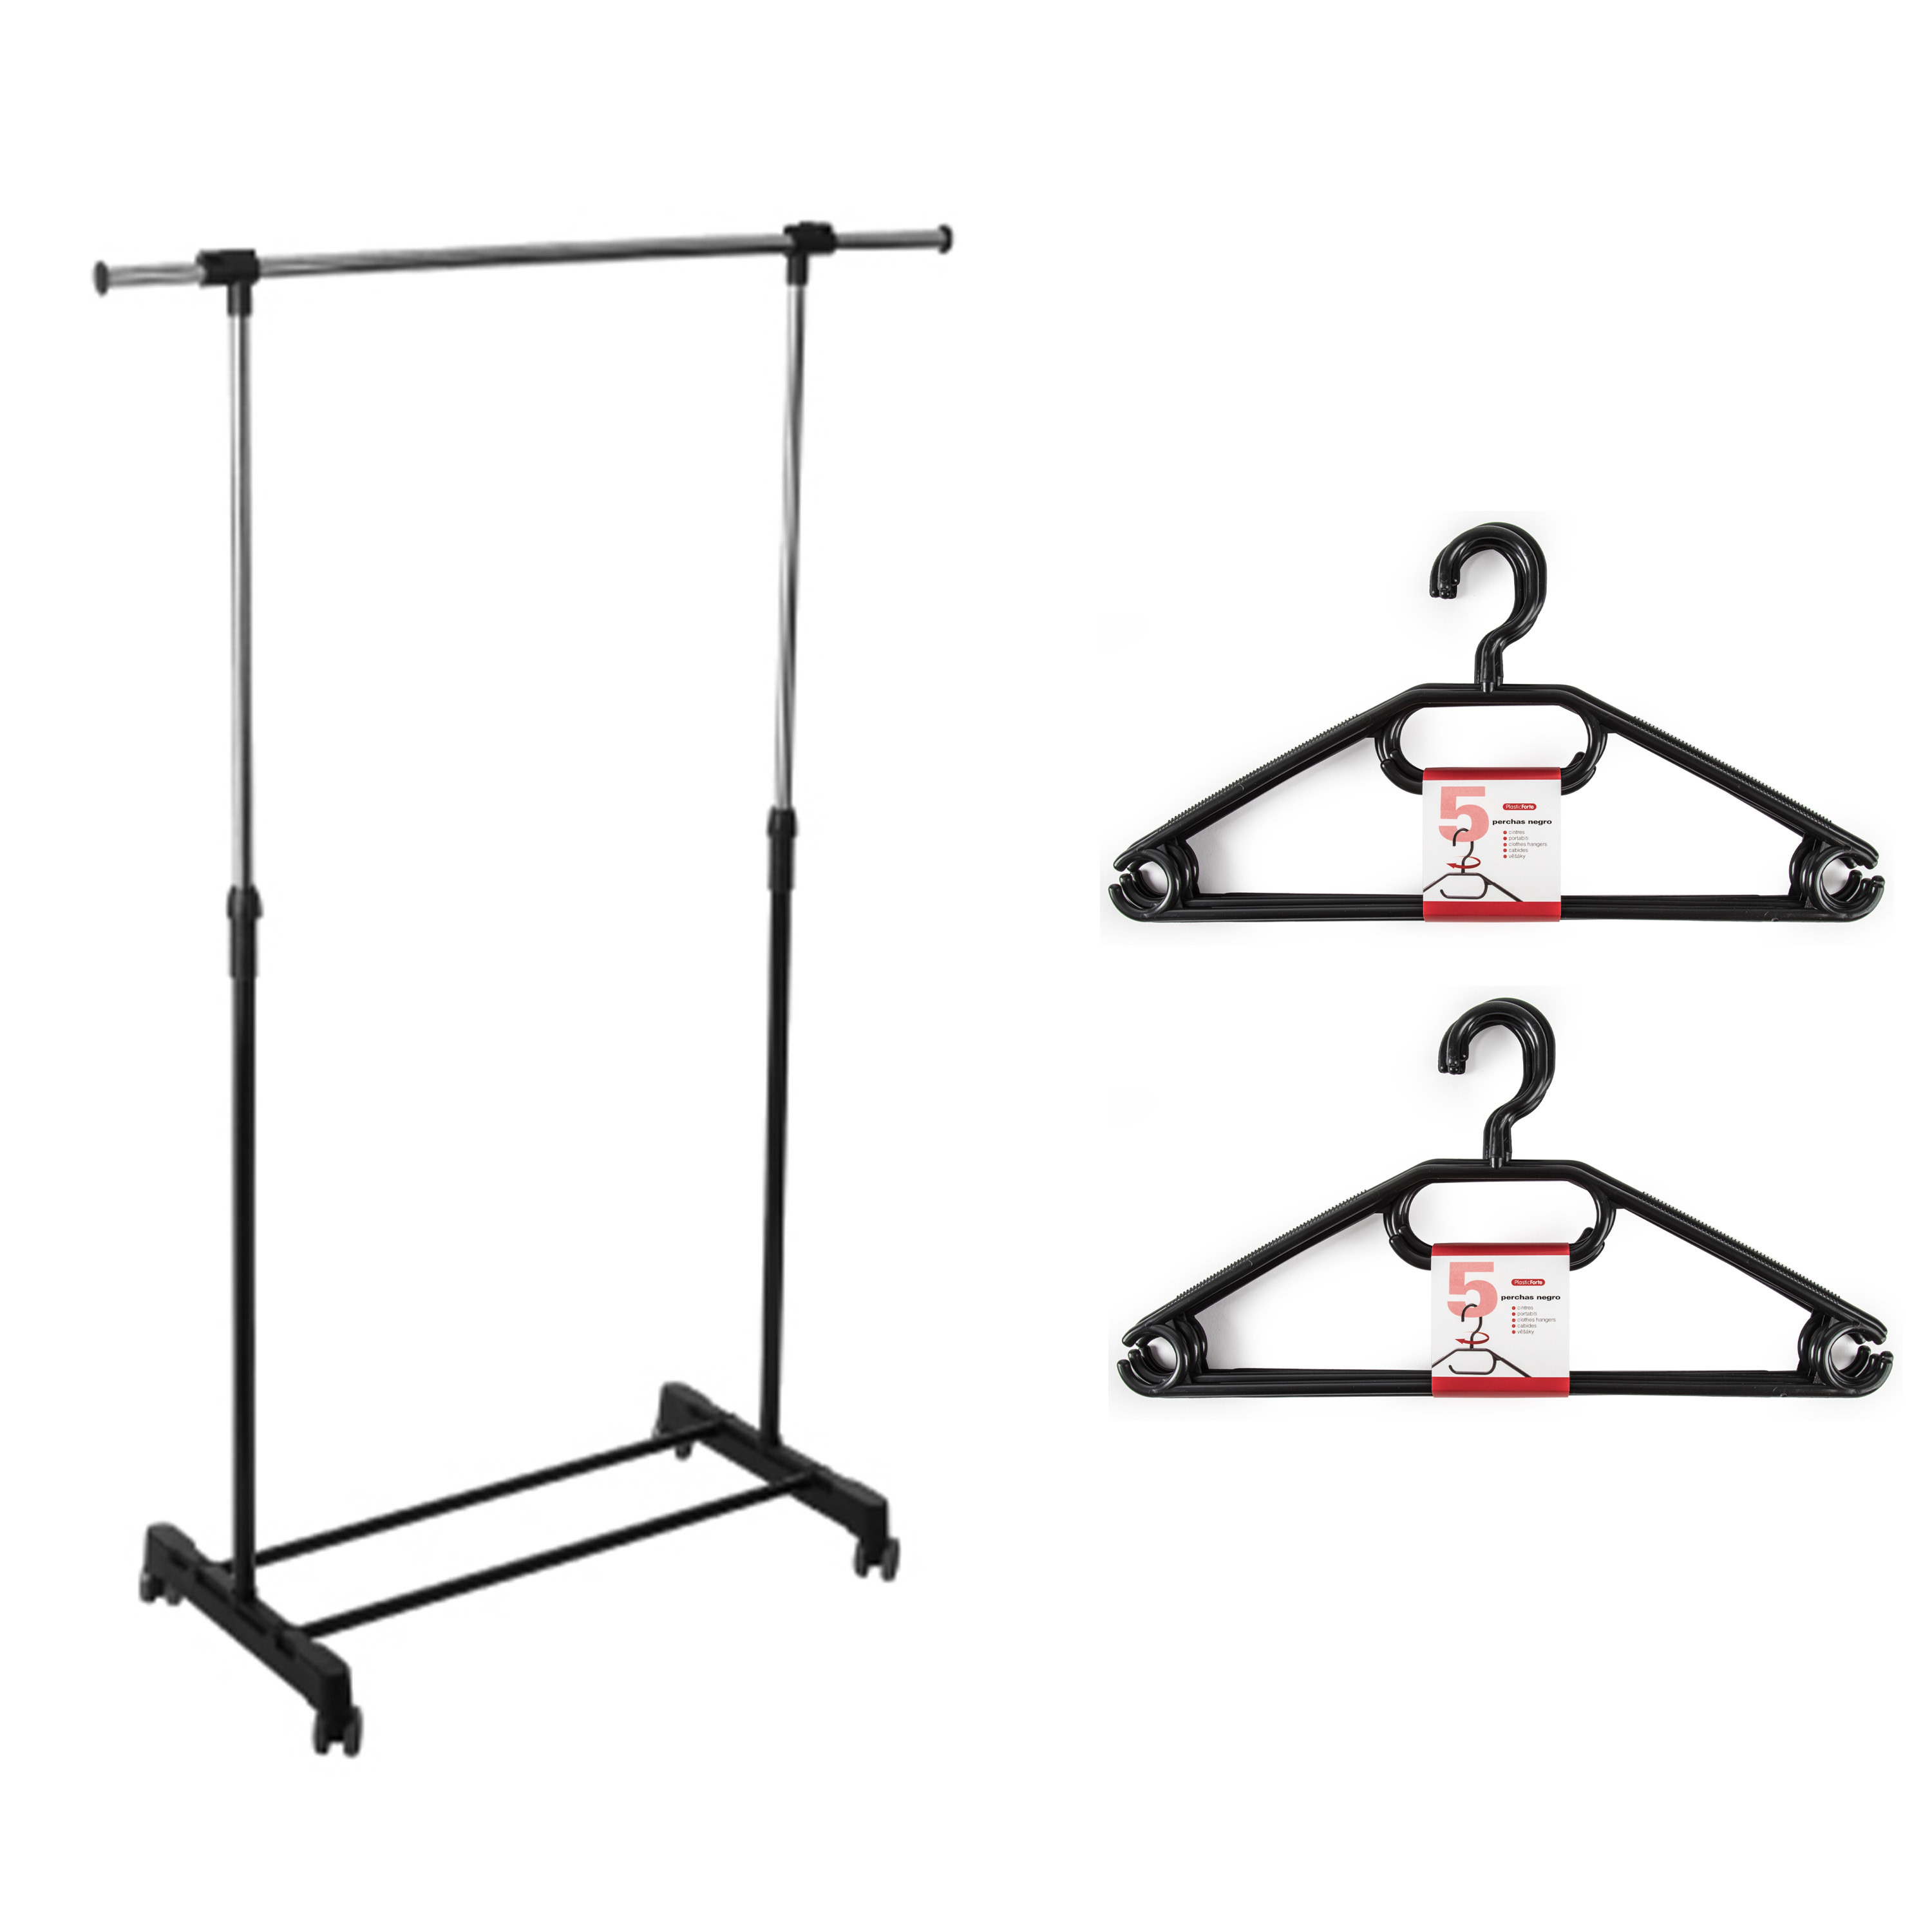 Kledingrek met kleding hangers enkele stang kunststof-metaal zwart 120 x 42 x 165 cm